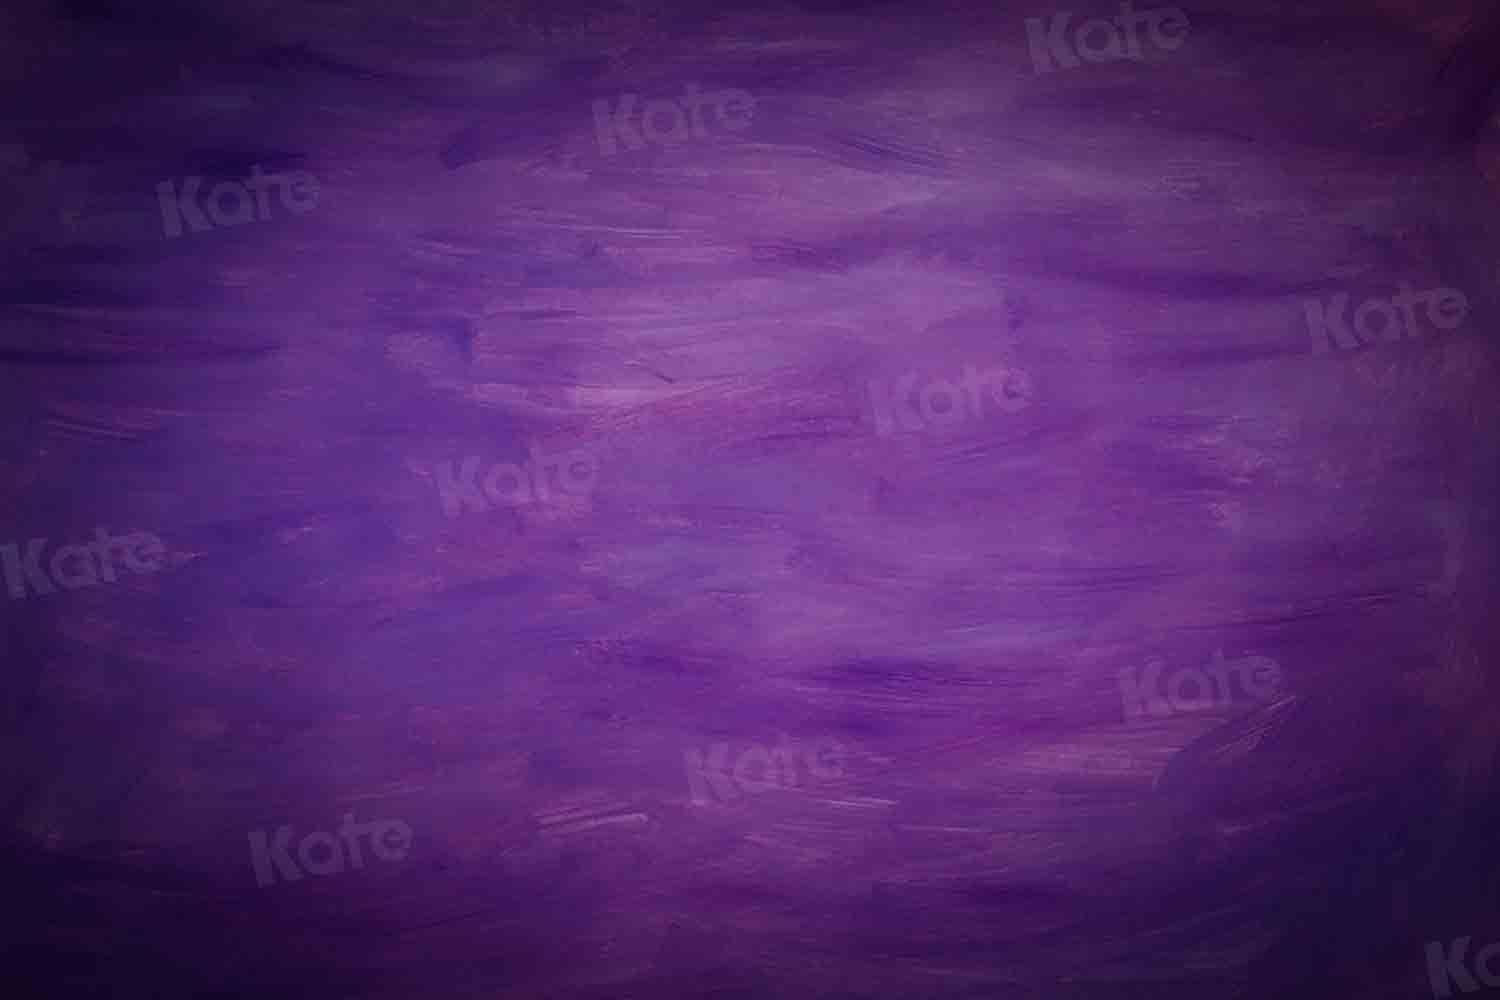 Kate Abstrakter lila Hintergrund